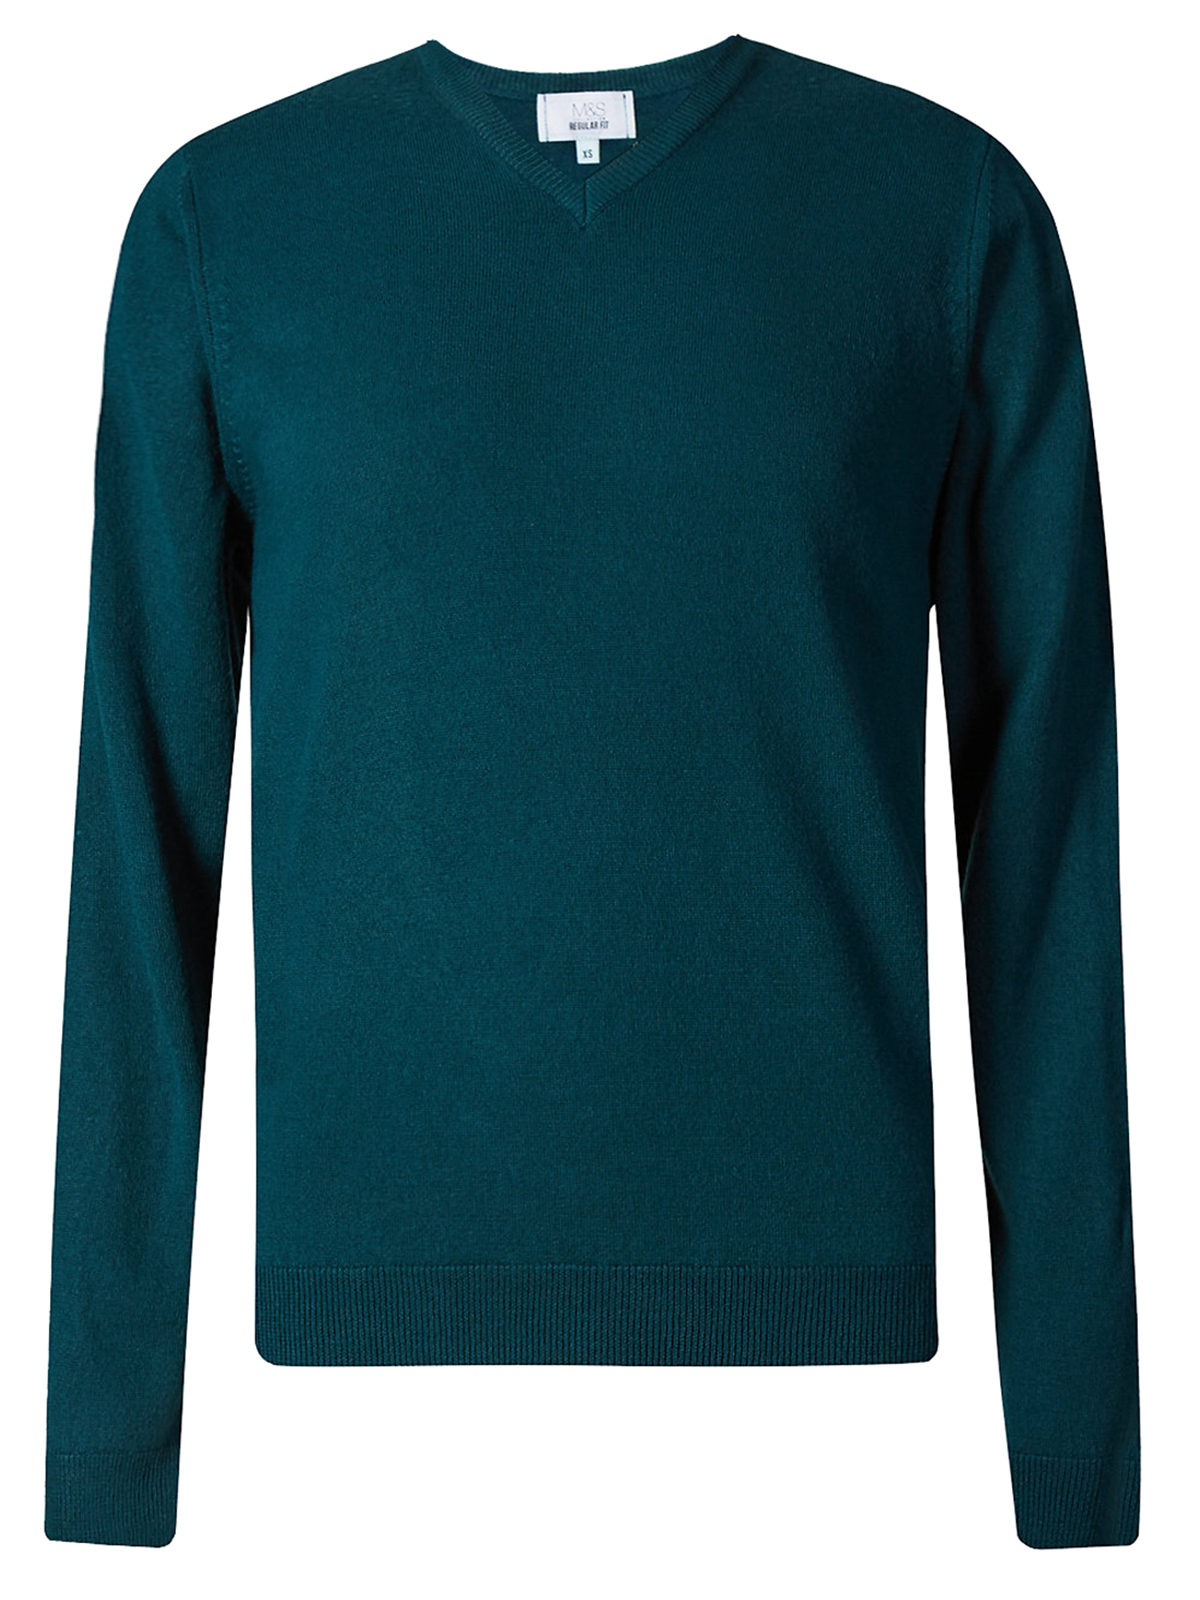 Marks and Spencer - - M&5 GREEN V-Neck Long Sleeve Knitted Jumper ...